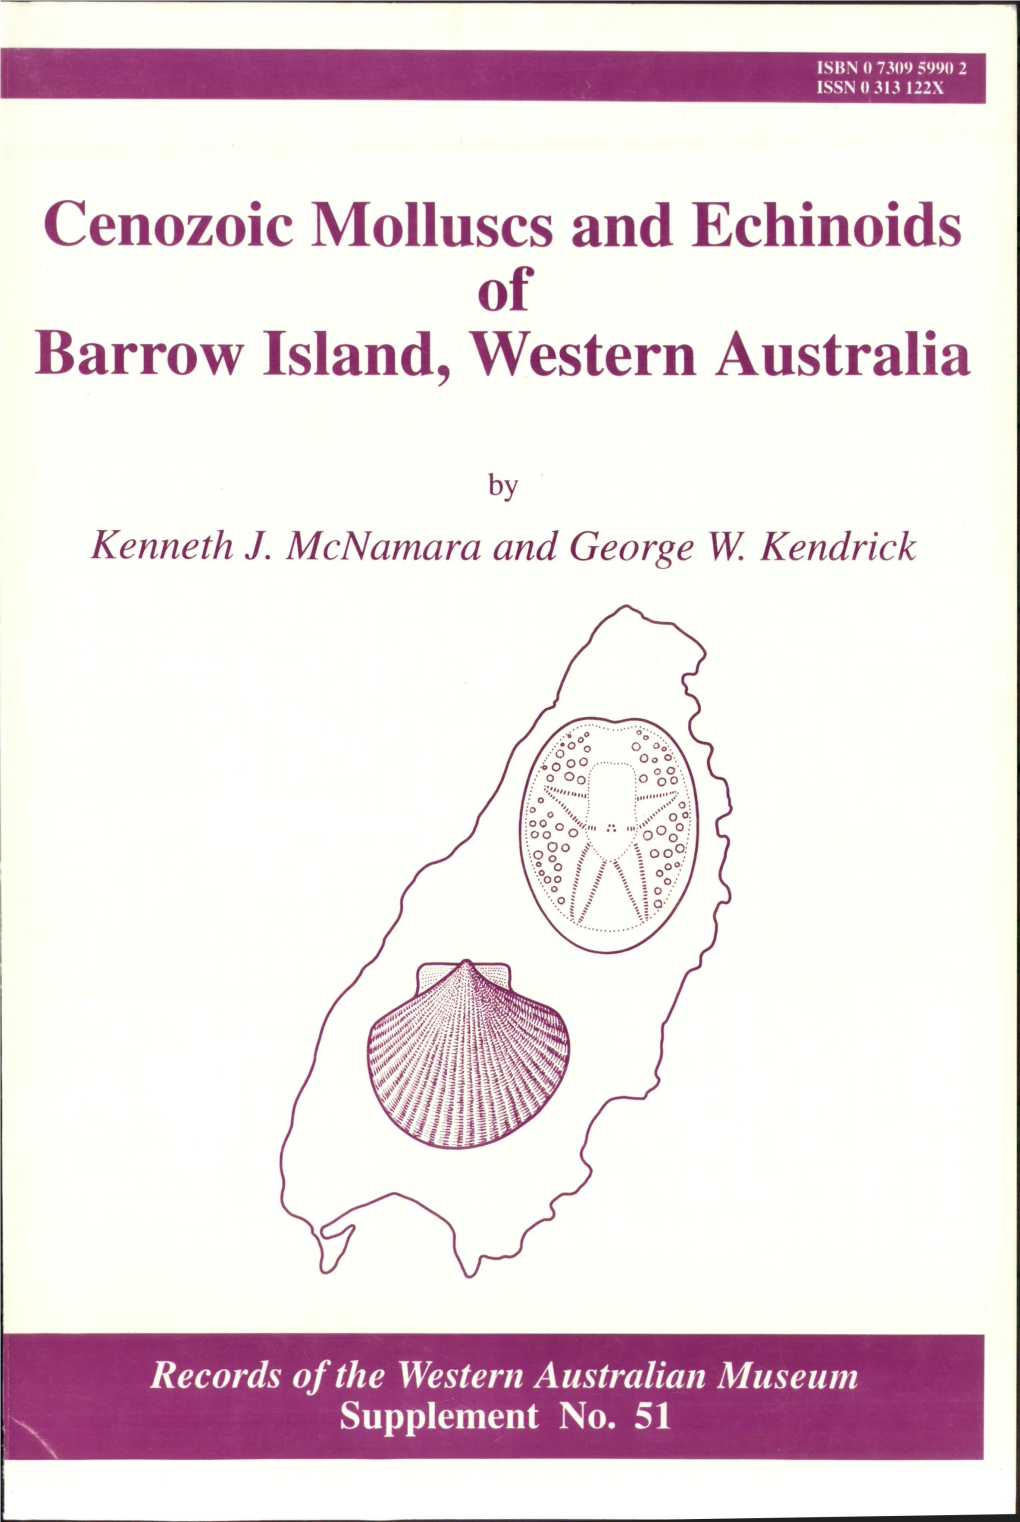 Cenozoic Molluscs and Echinoids of Barrow Island, Western Australia